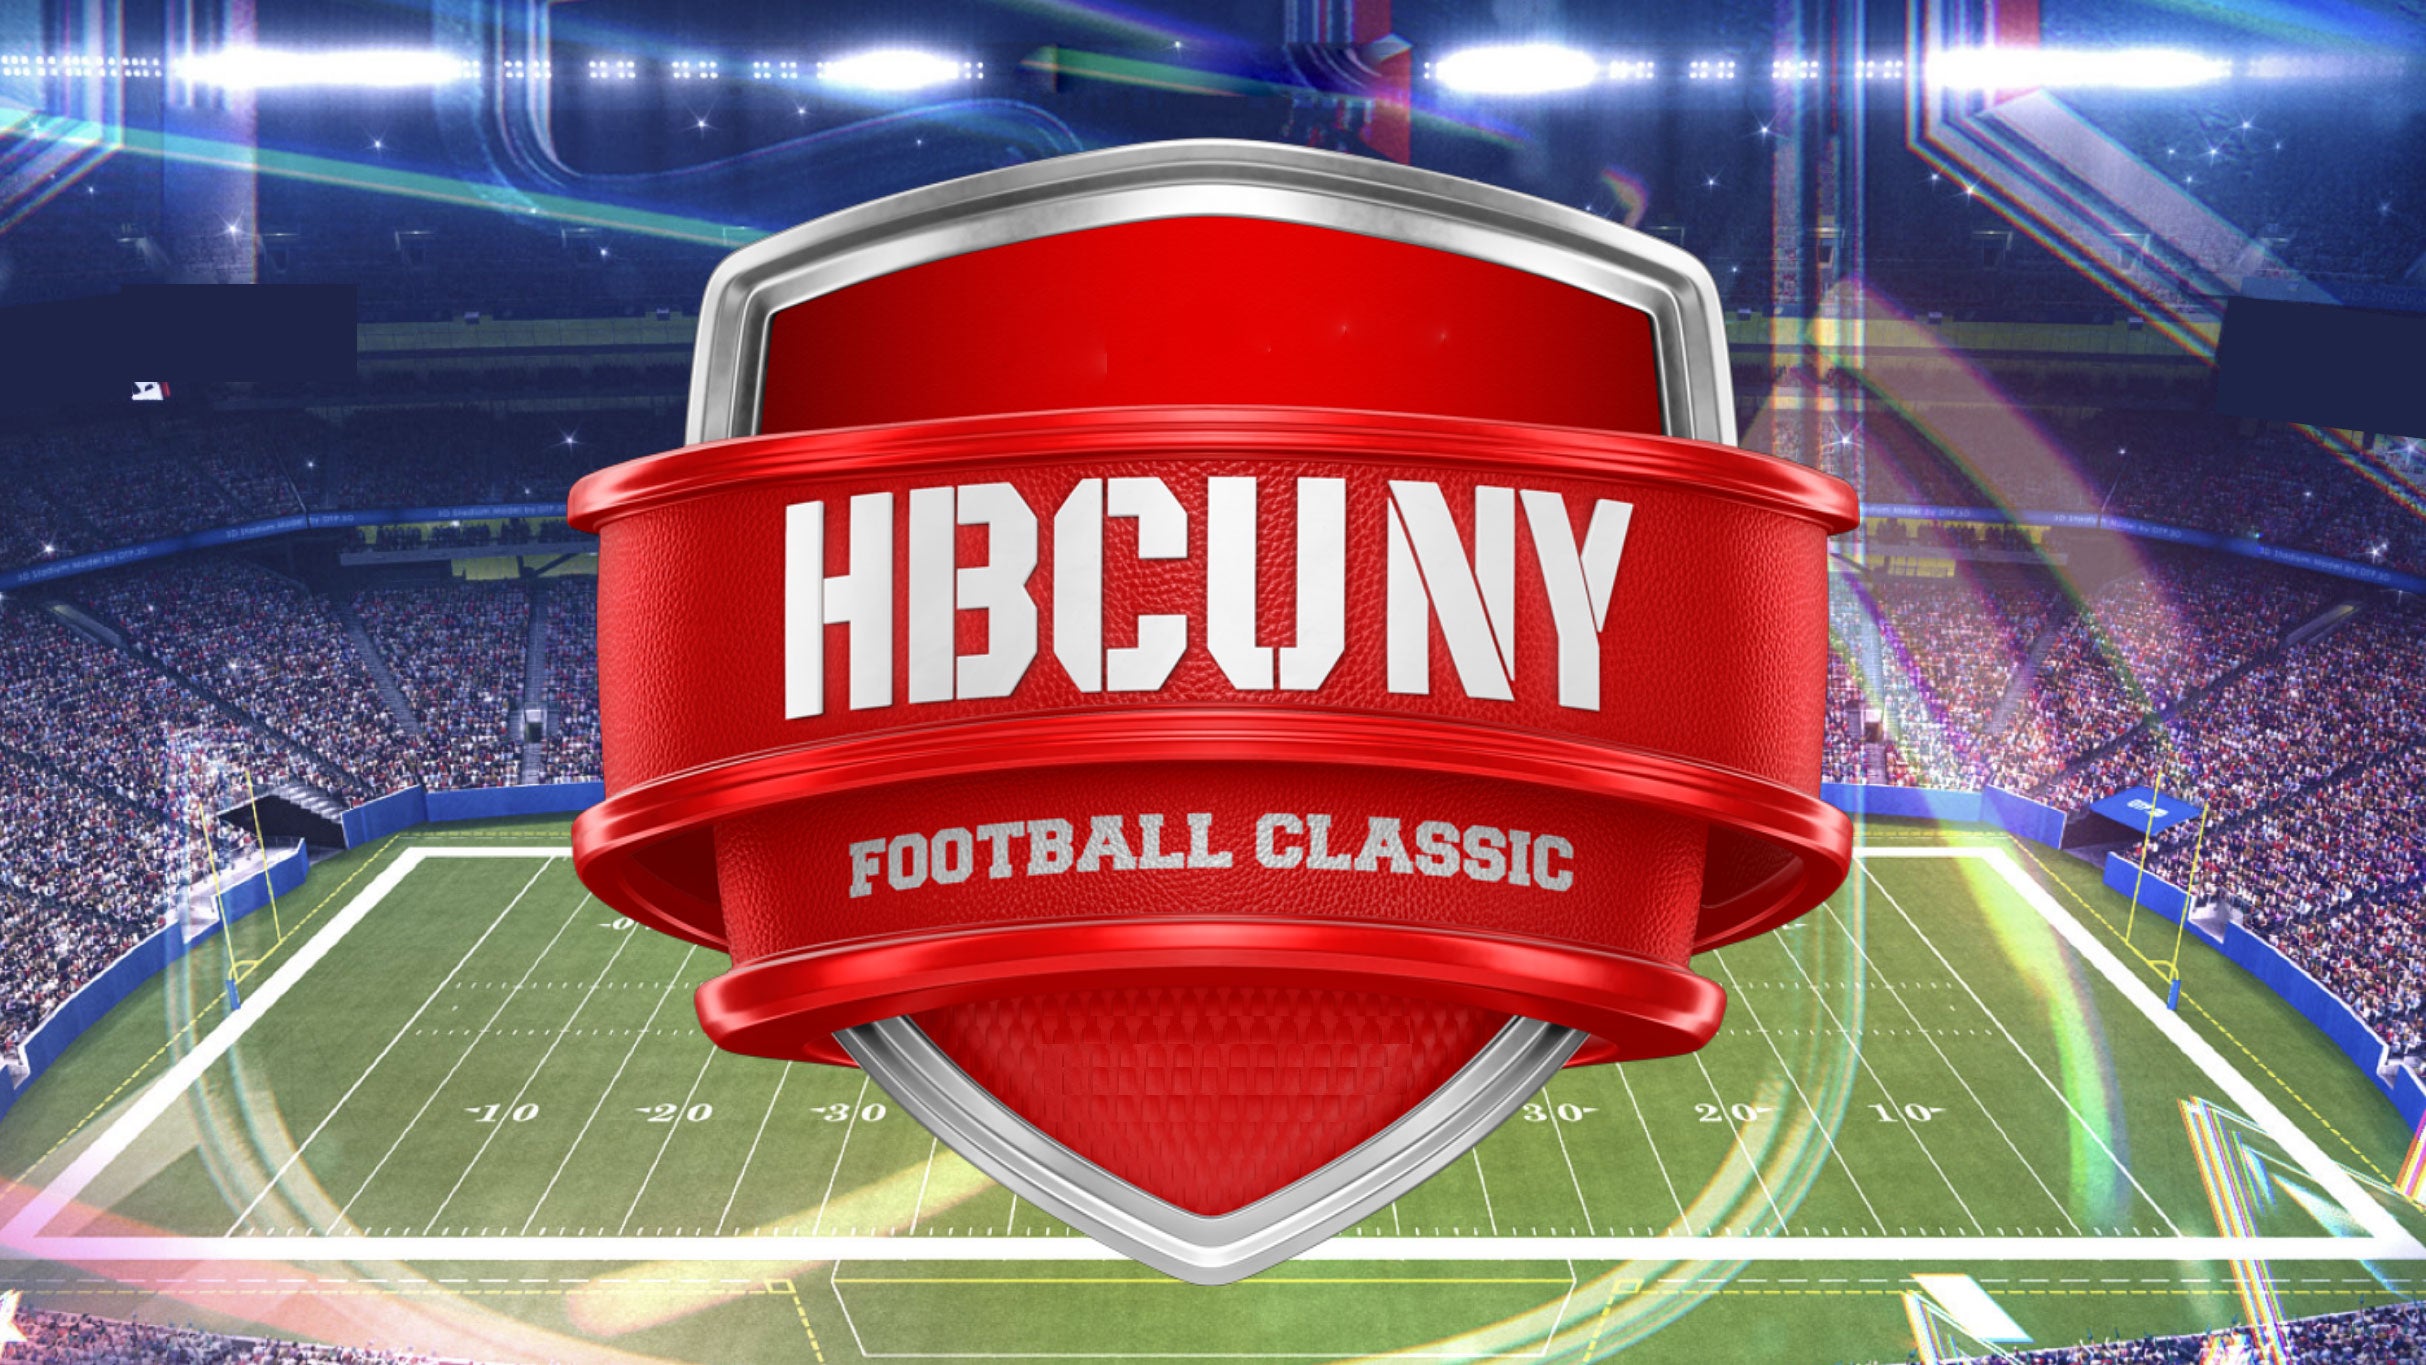 WiseGuys HBCU New York Football ClassicMorehouse College v. Howard